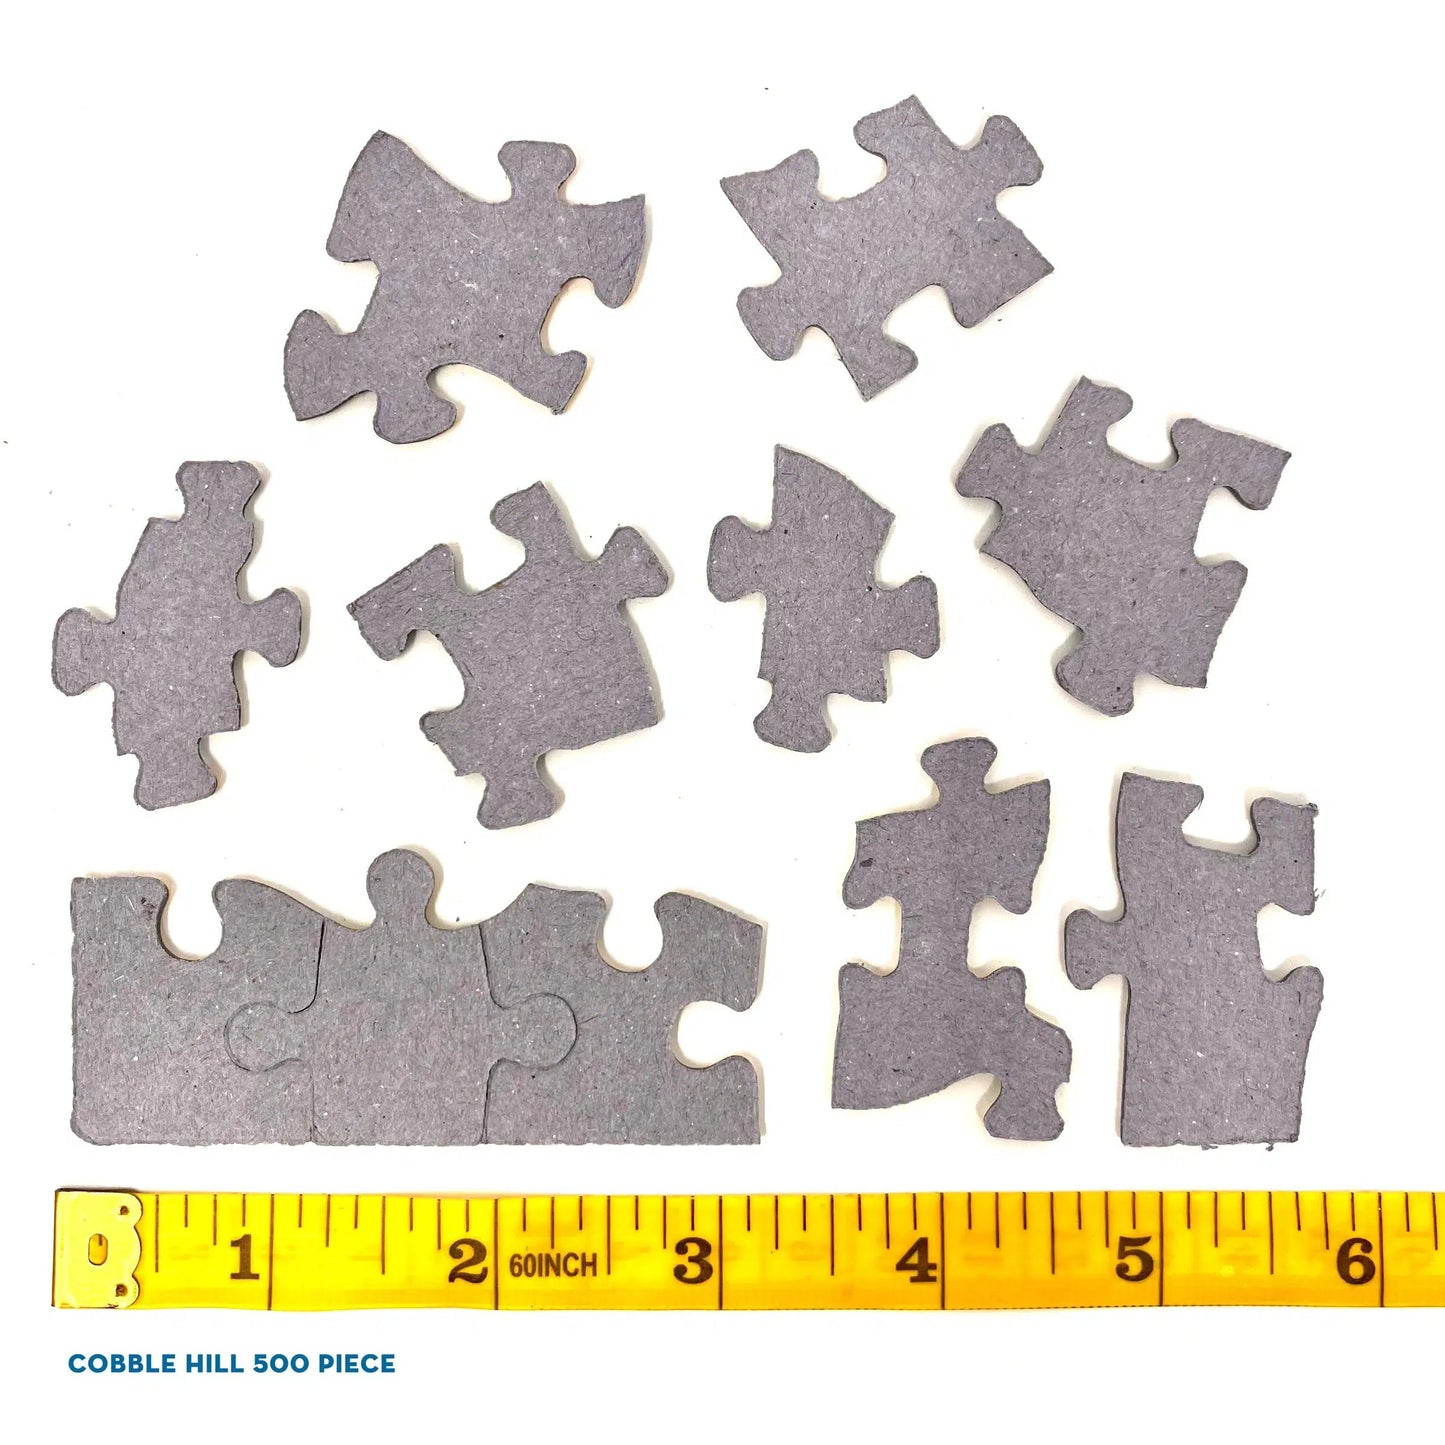 Capricorn 500 Piece Jigsaw Puzzle Cobble Hill